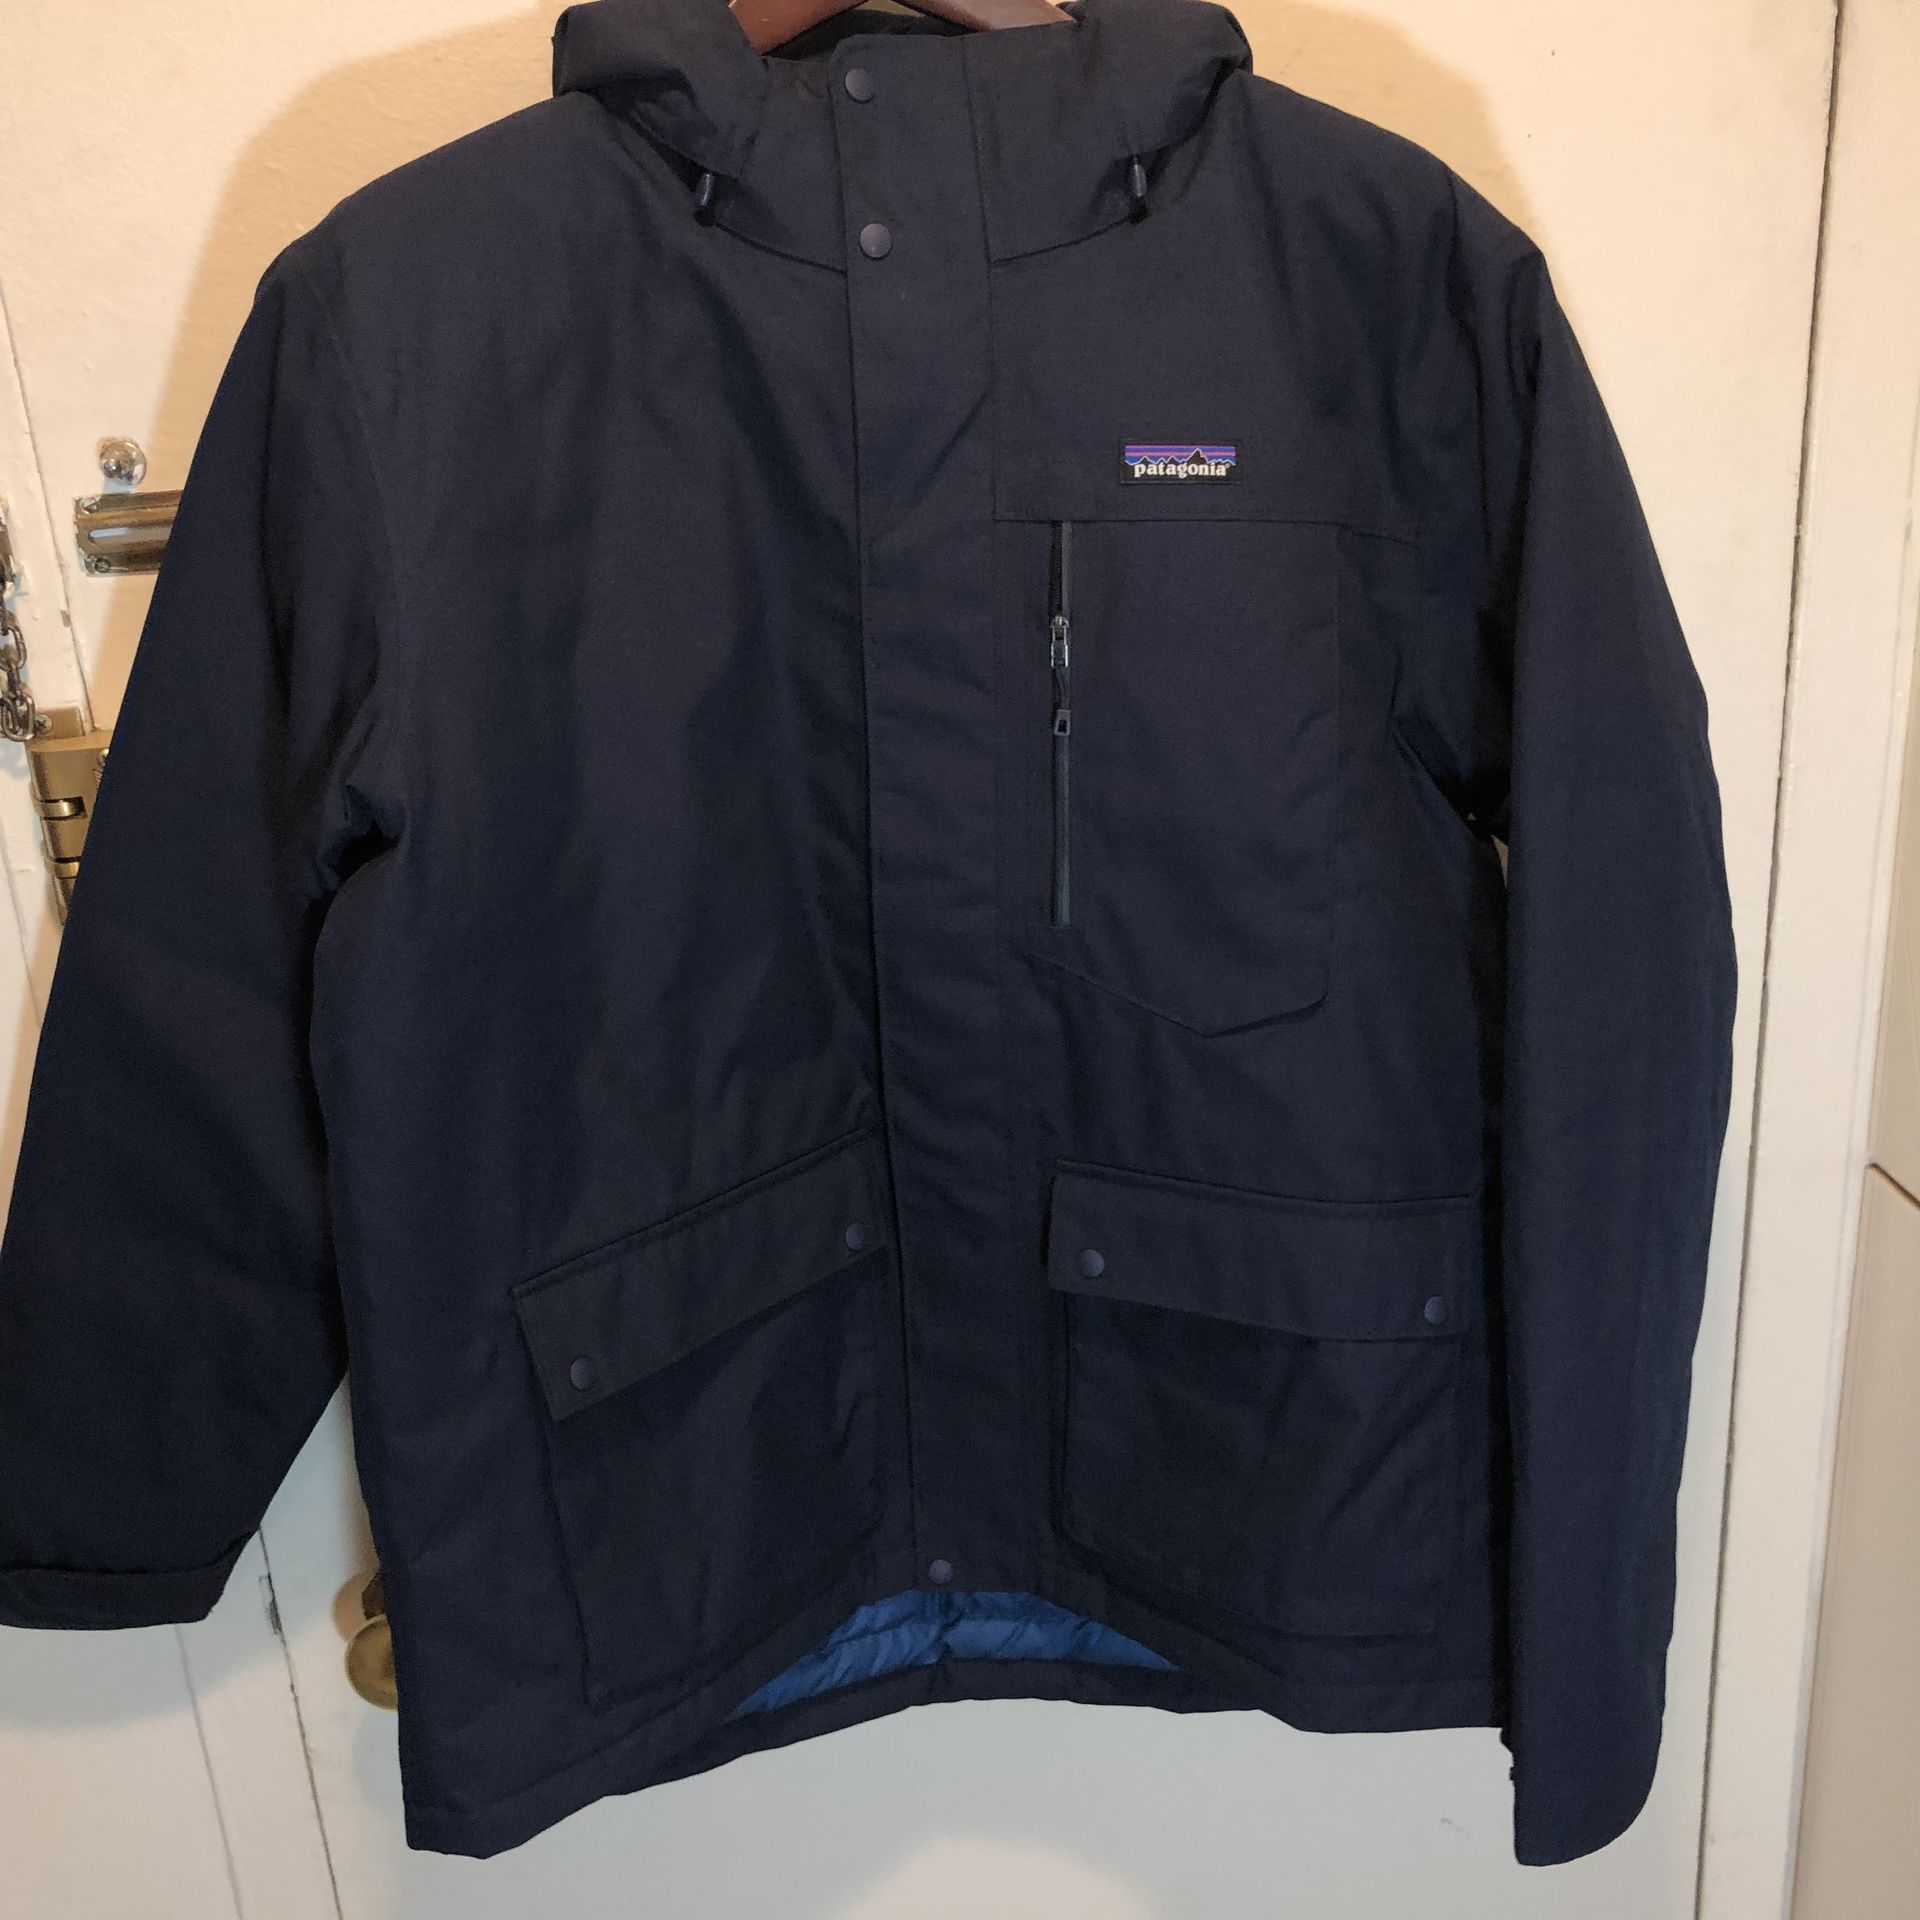 Patagonia Topley Jacket Men's Sz XL Down Jacket Navy Blue Style #27900 $399 NWT